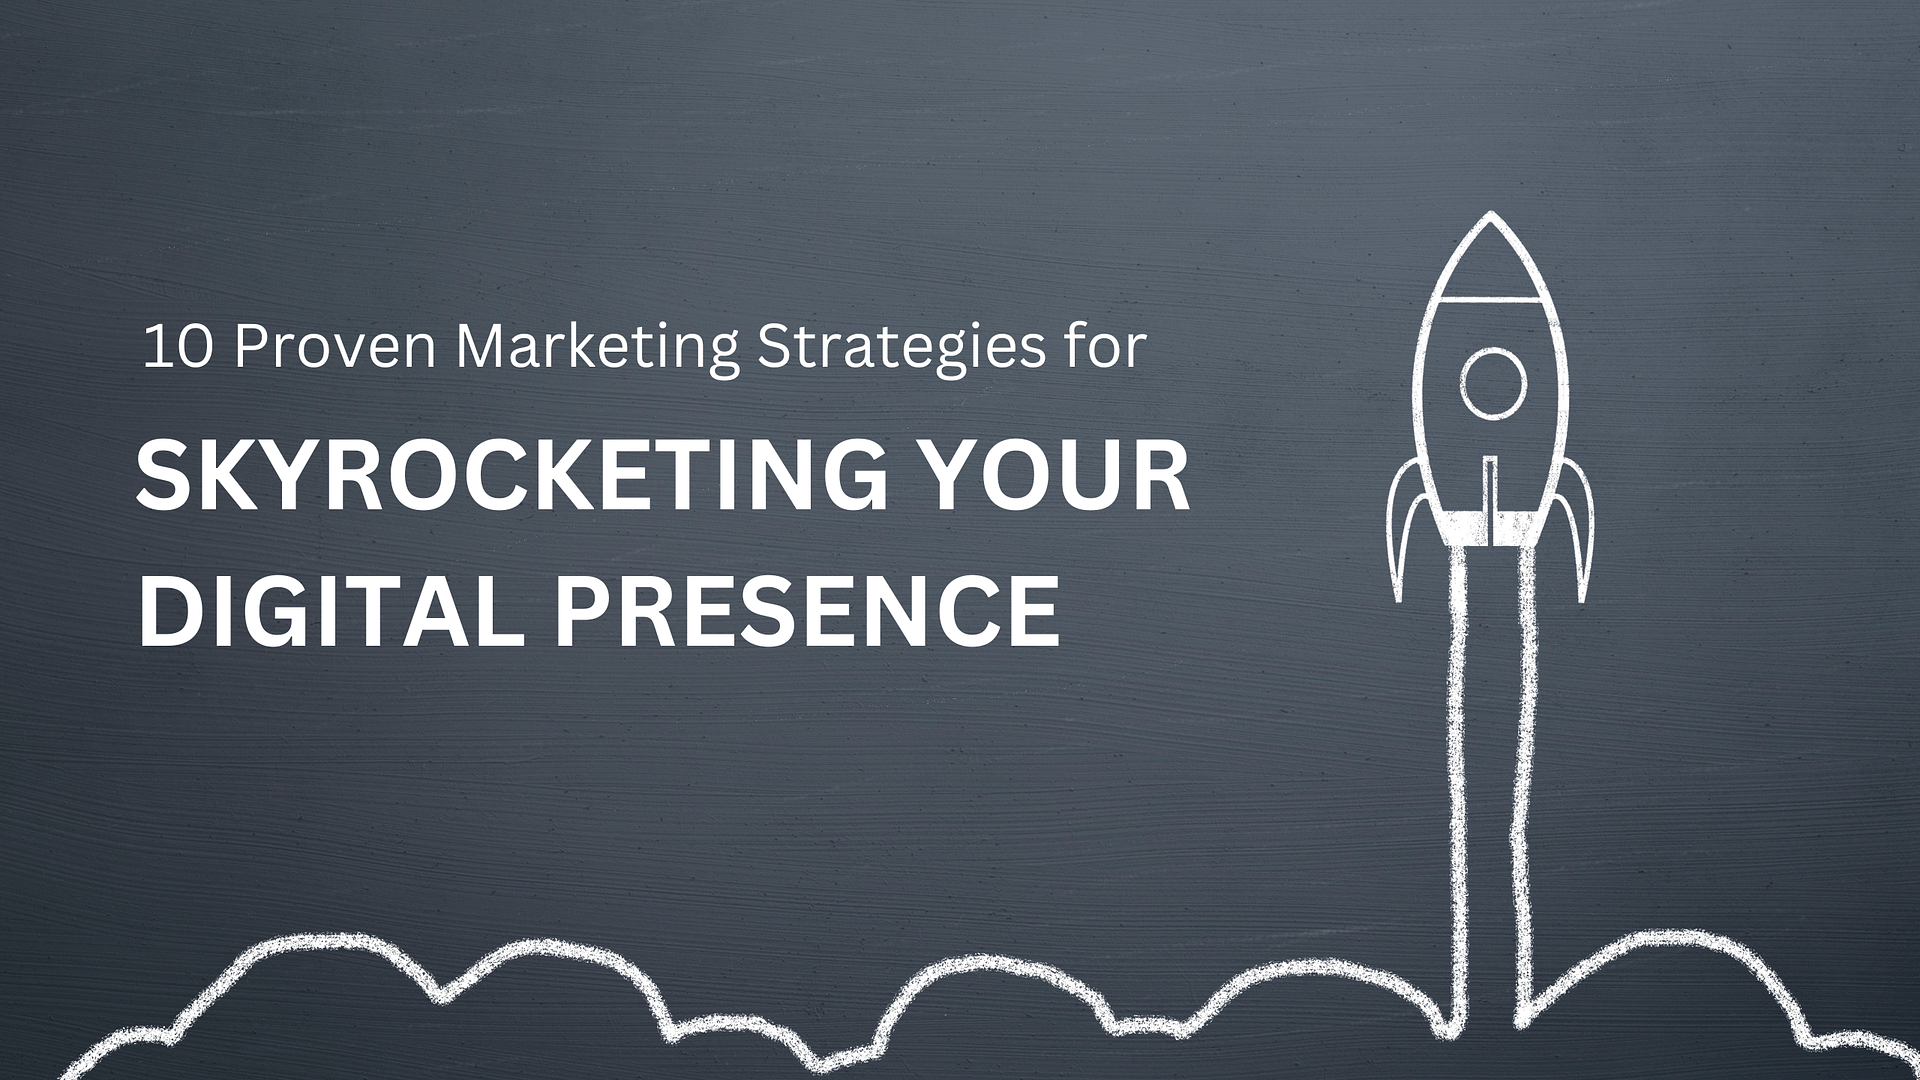 Marketing Strategies for Digital Presence